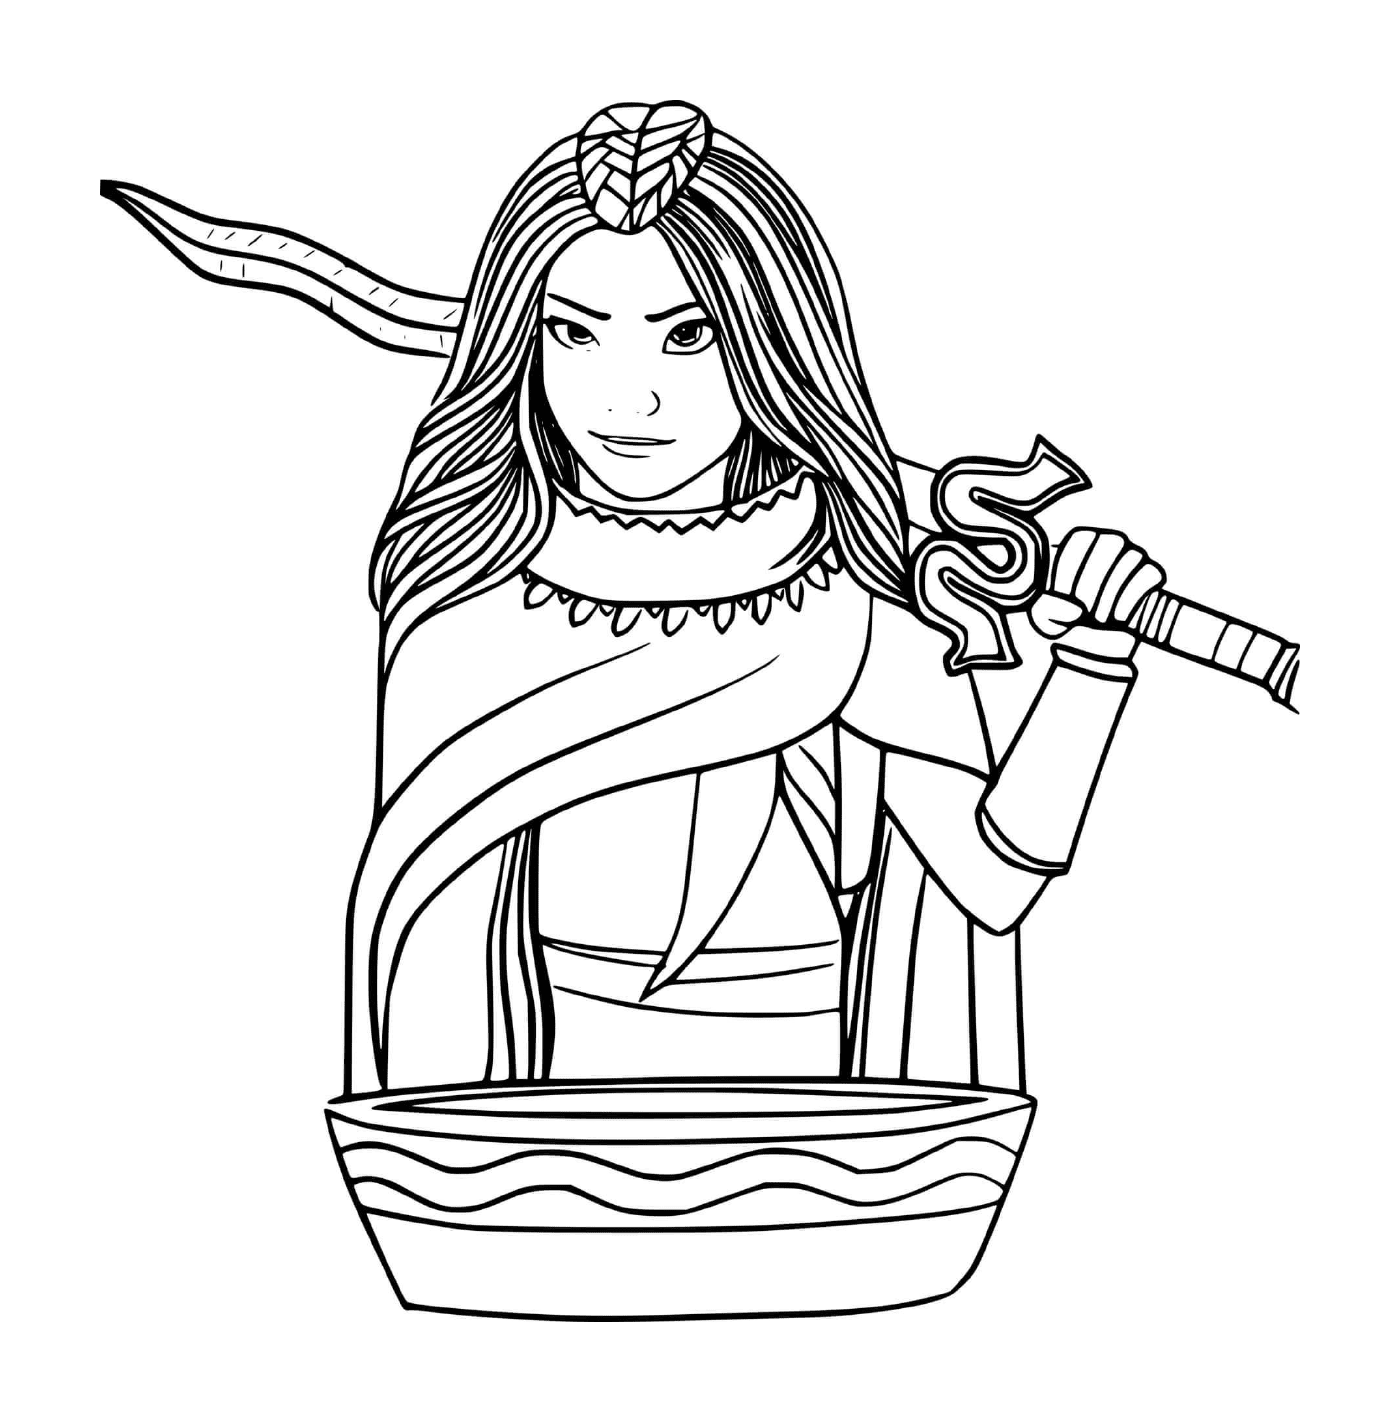  Raya and a pot, magic snake 